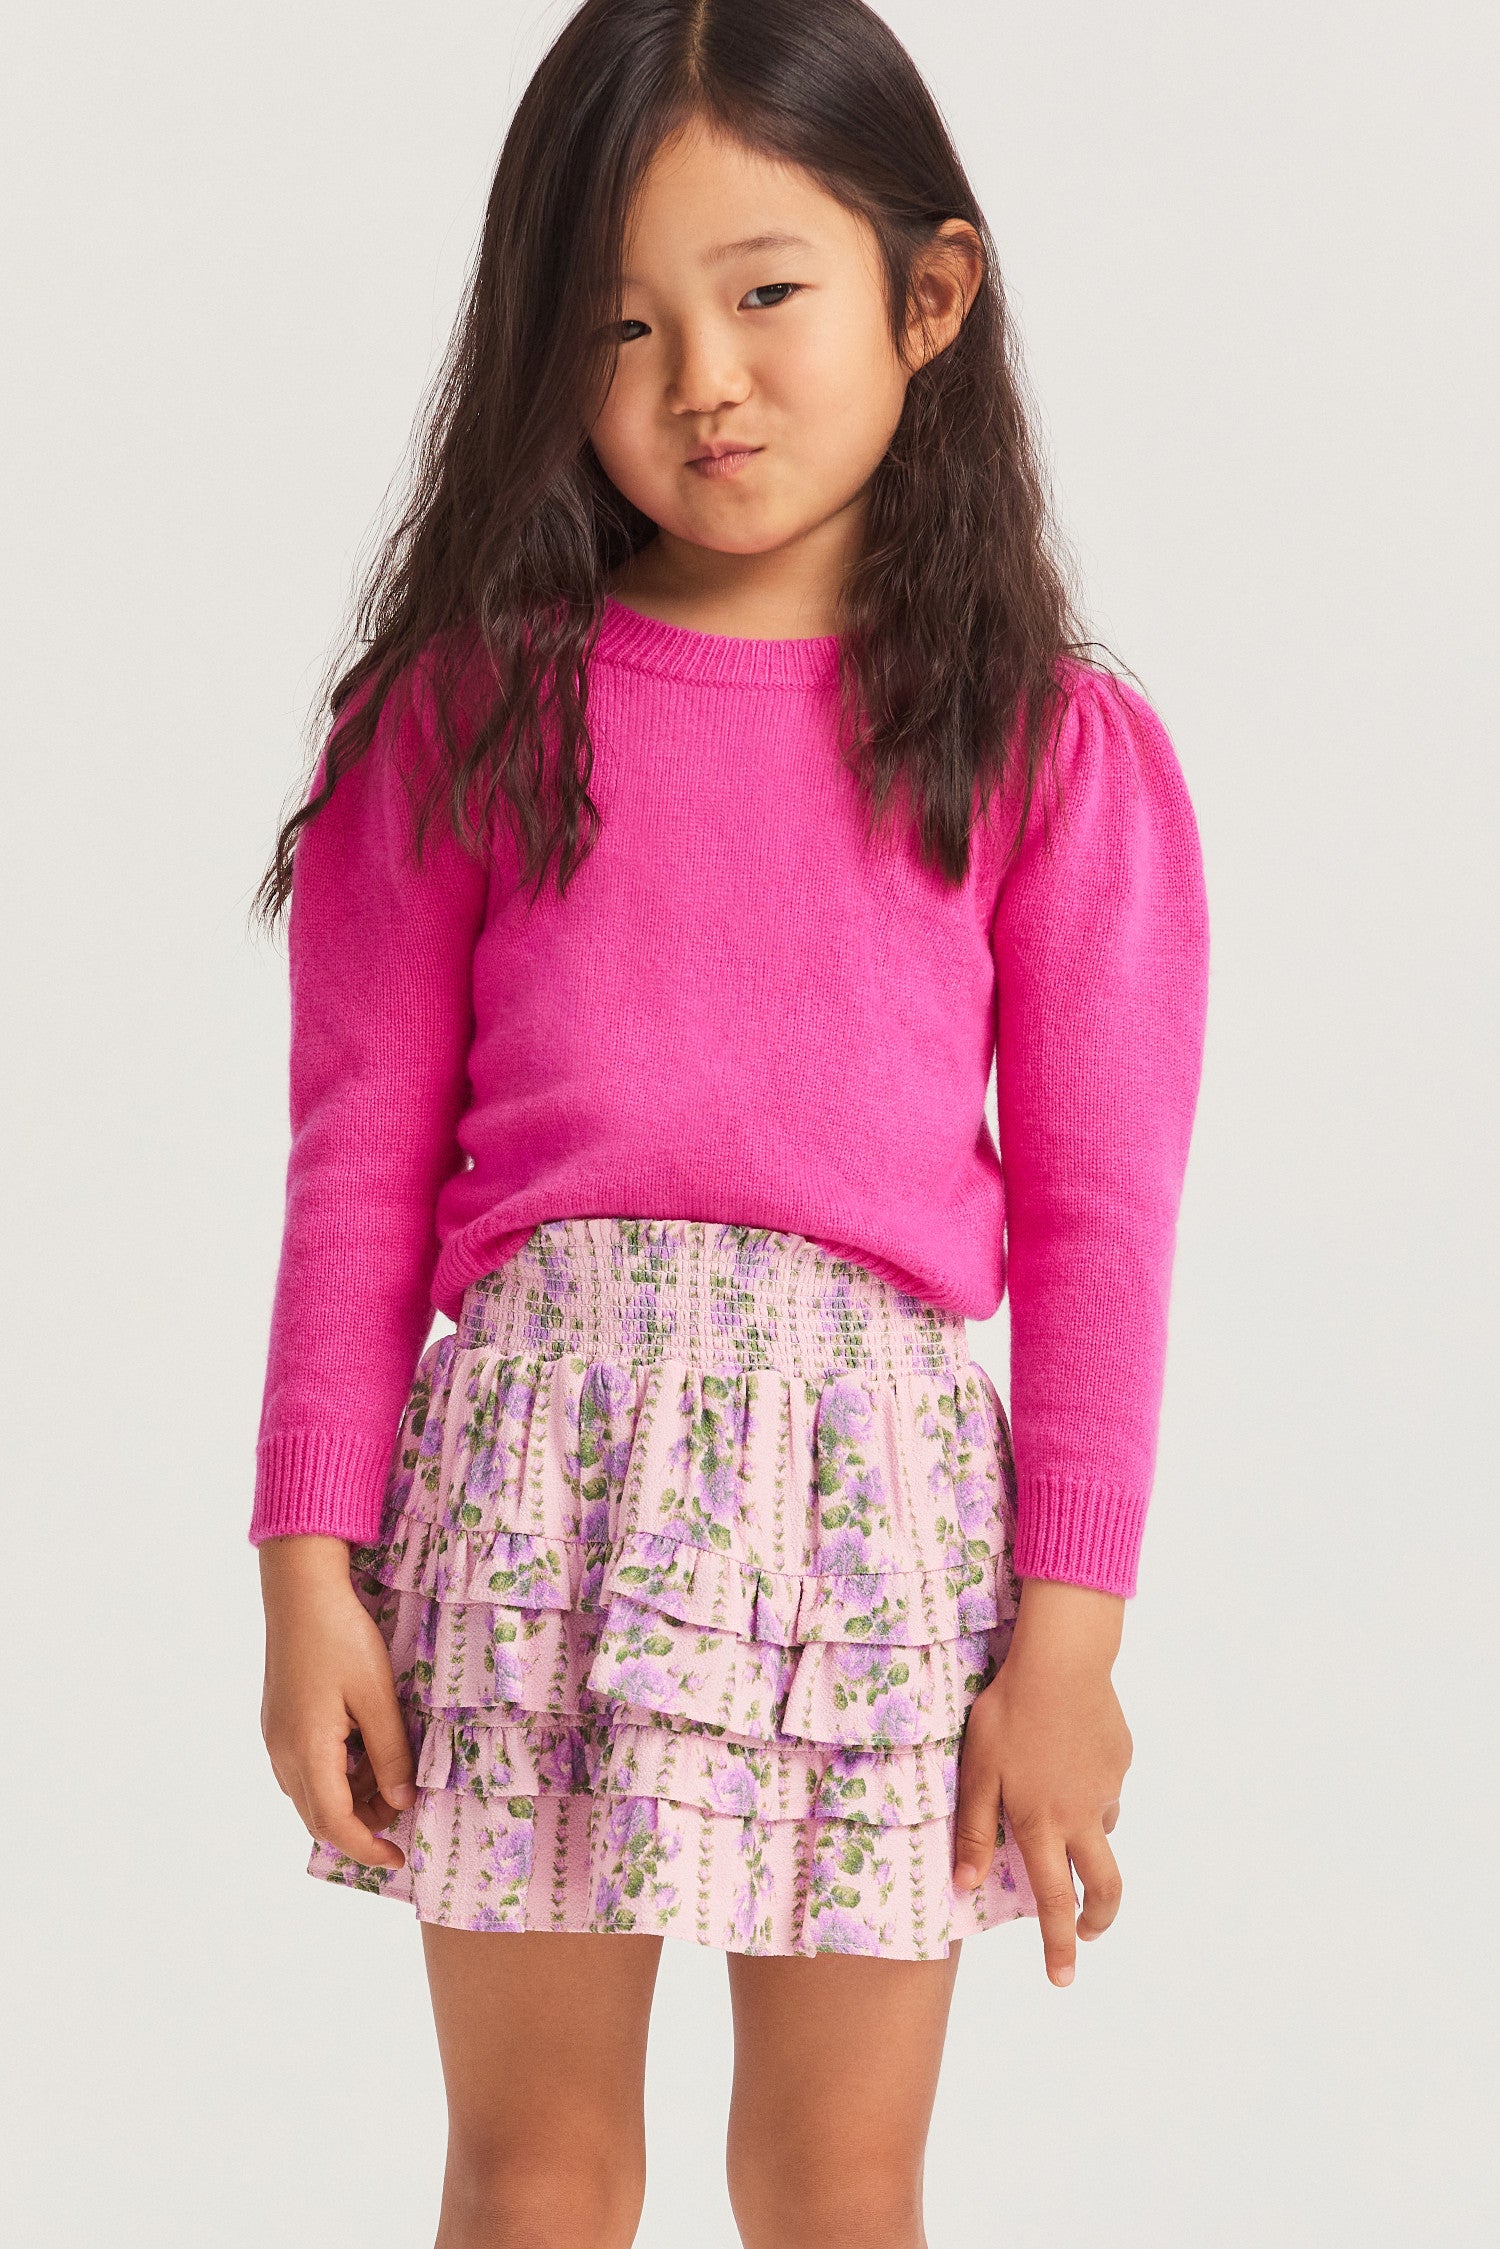 Little girls ruffle mini skirt in a pink flower print.